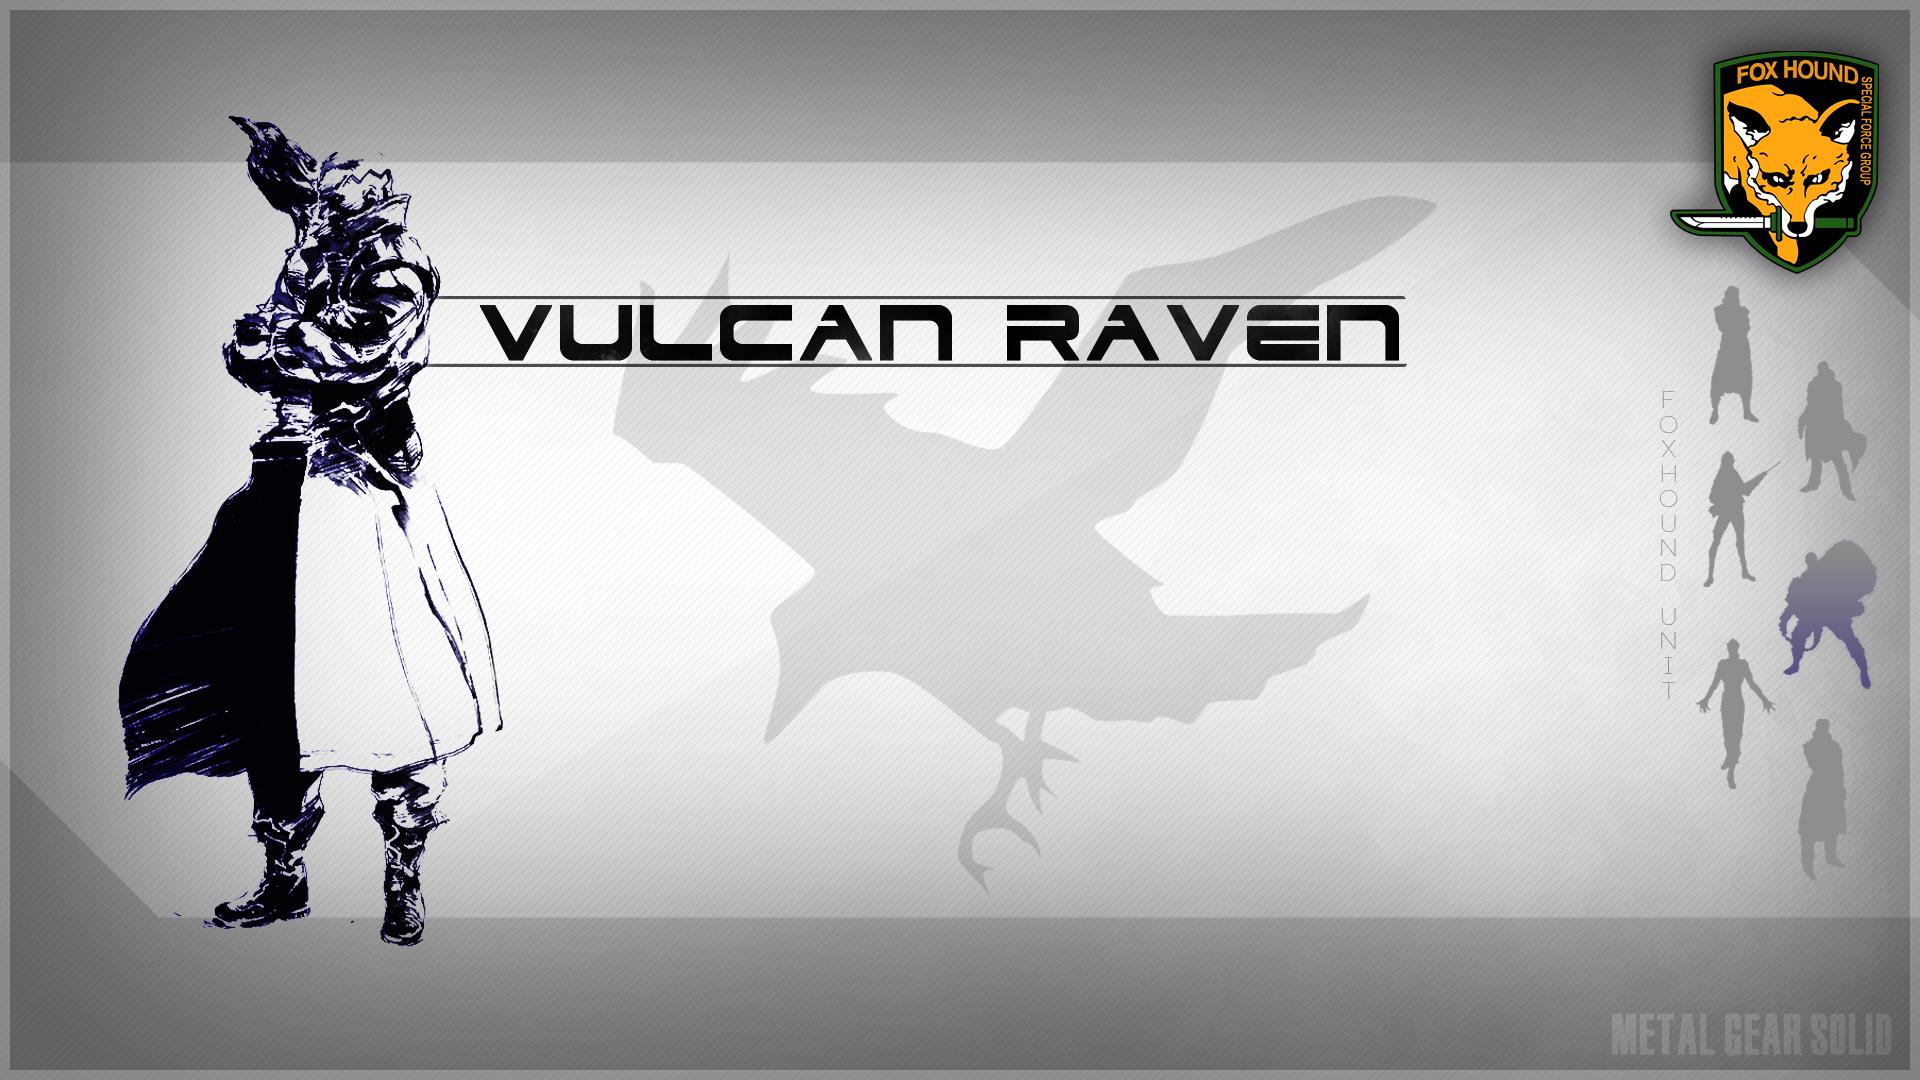 Vulcan Raven by Yoji Shinkawa